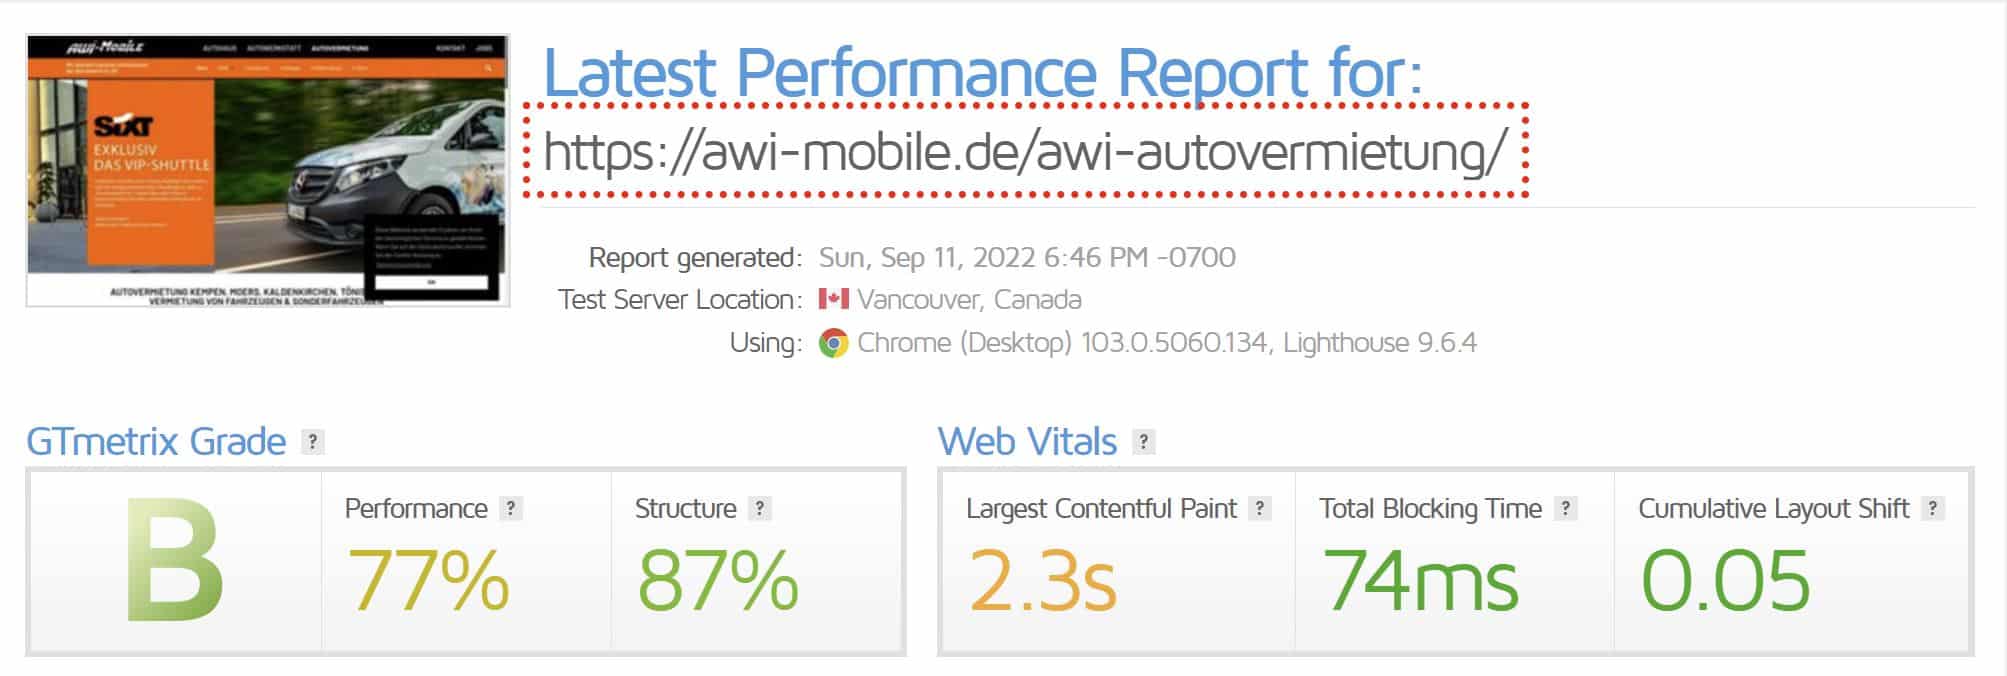 2022-09-12 03_46_37-Latest Performance Report for_ https___awi-mobile.de_awi-autovermietung_ _ GTmet